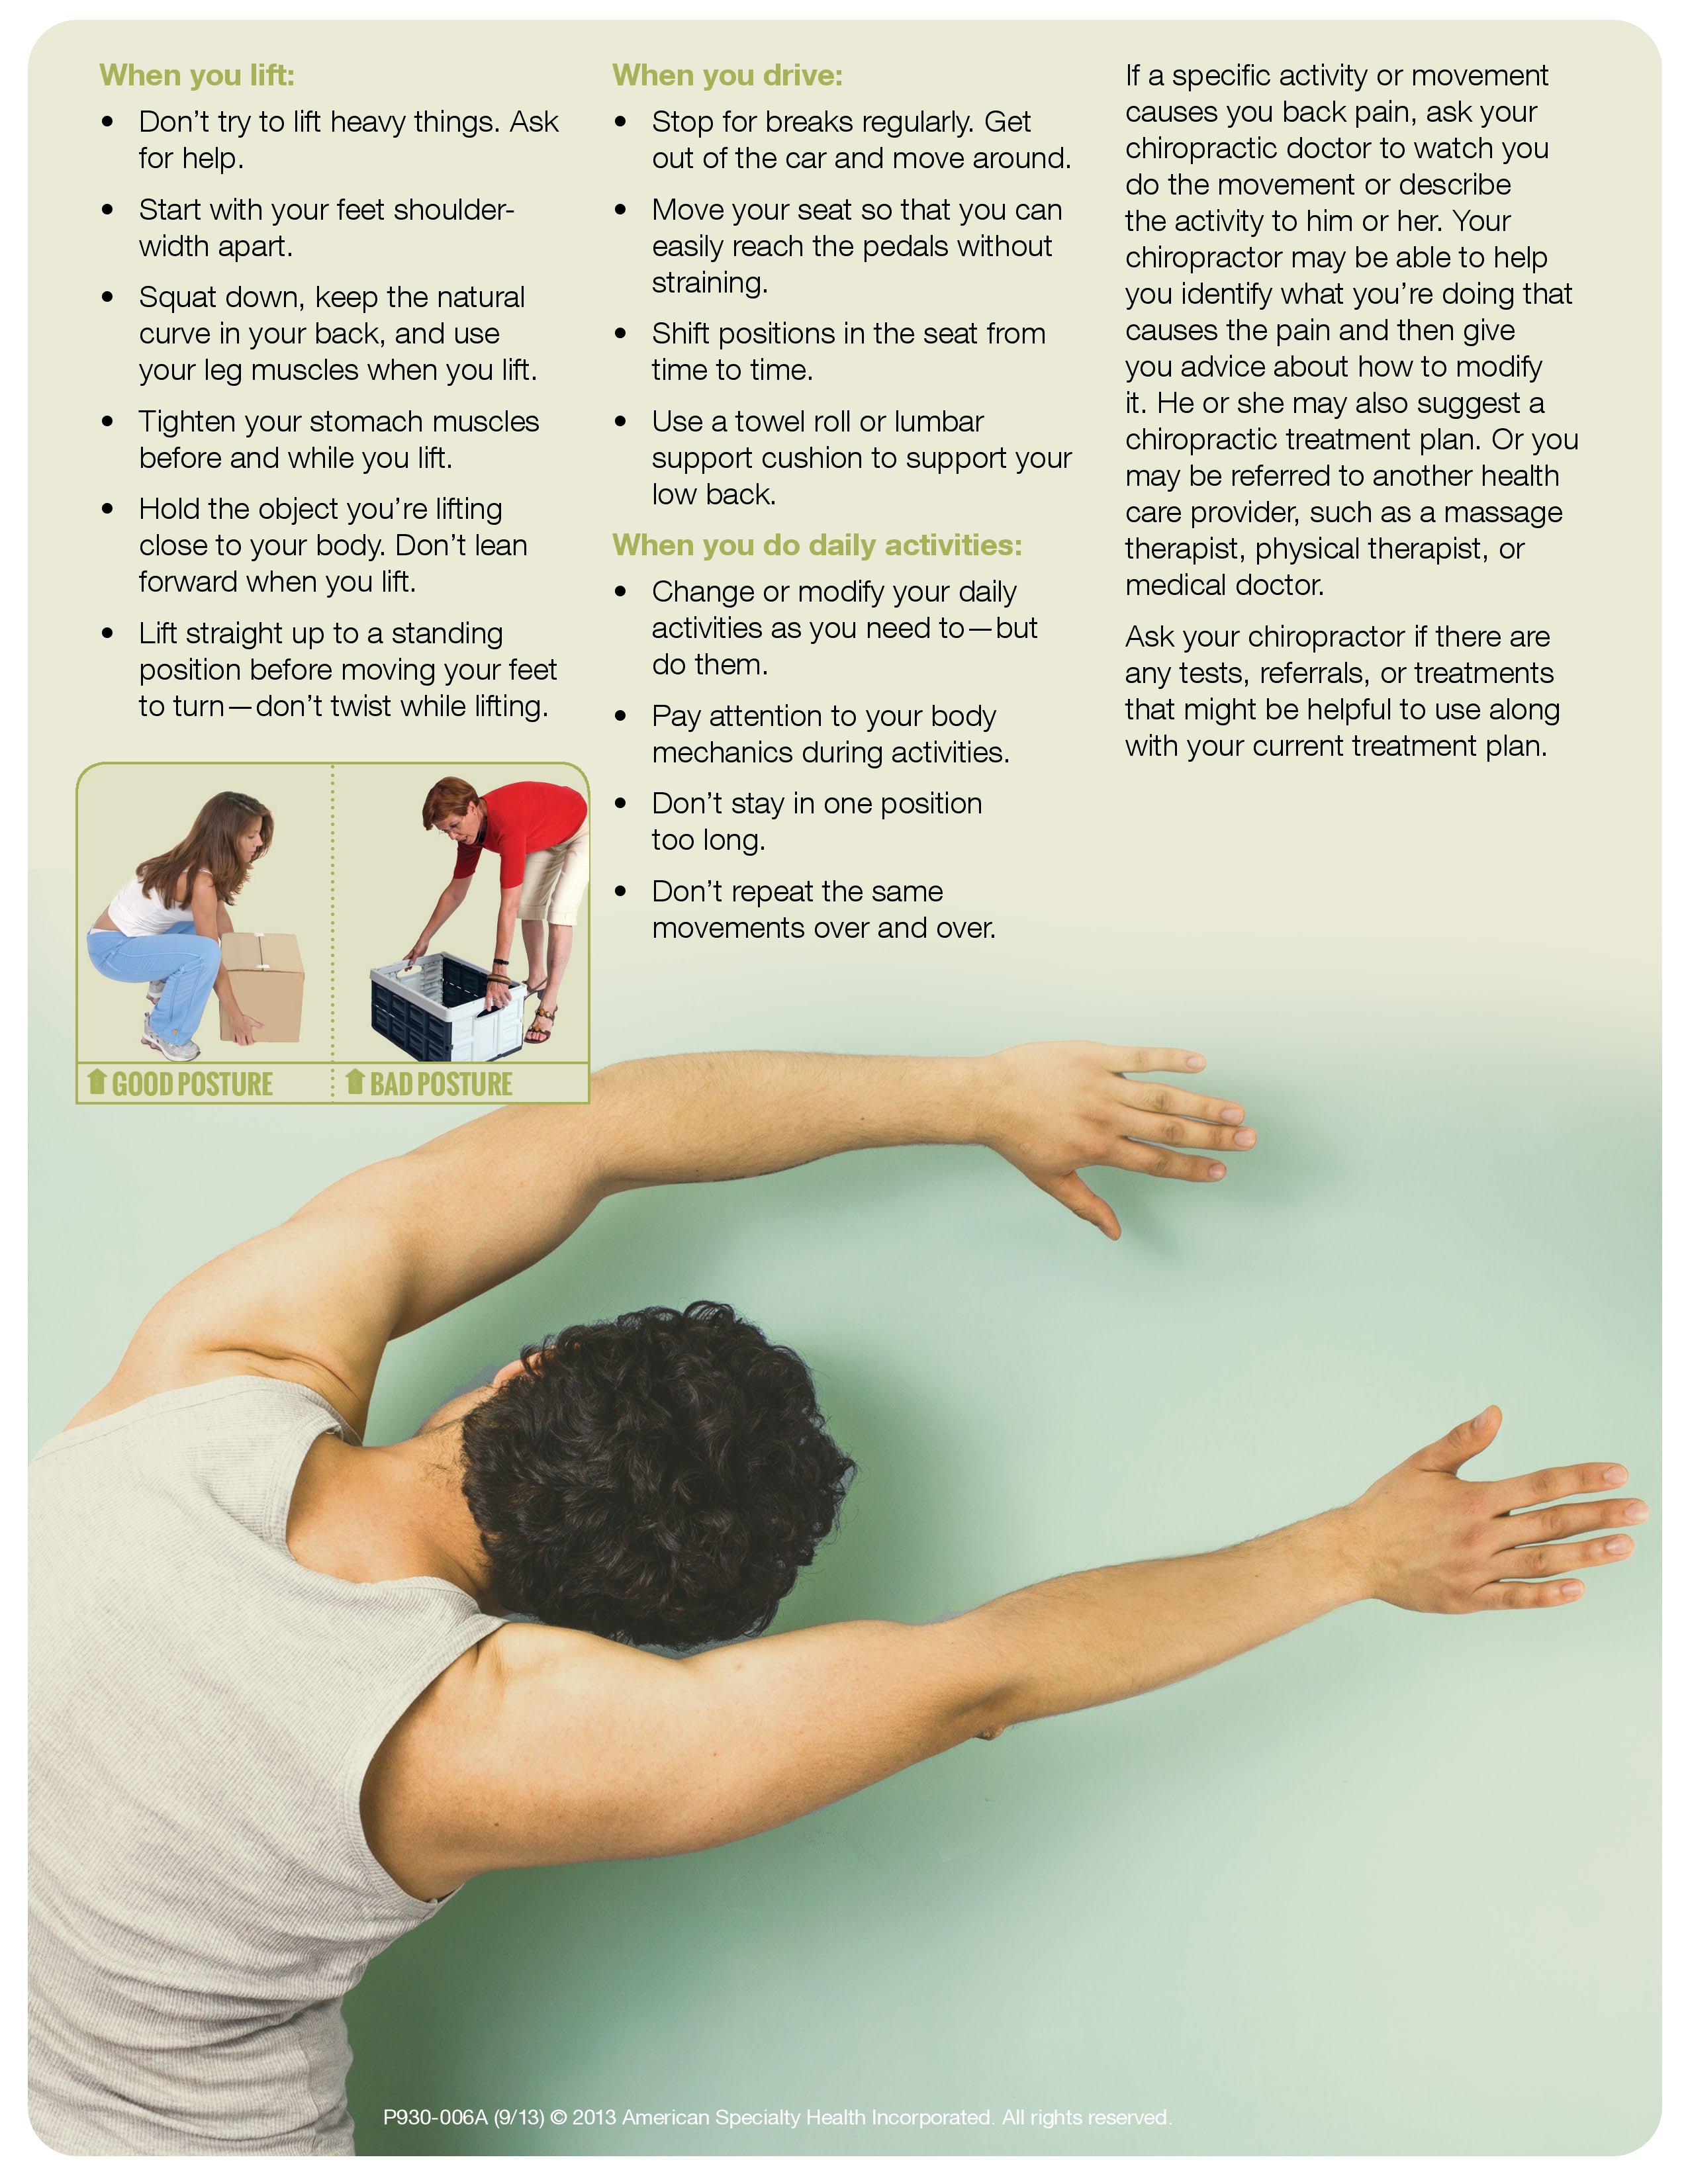 Tips for Minimizing Back Pain